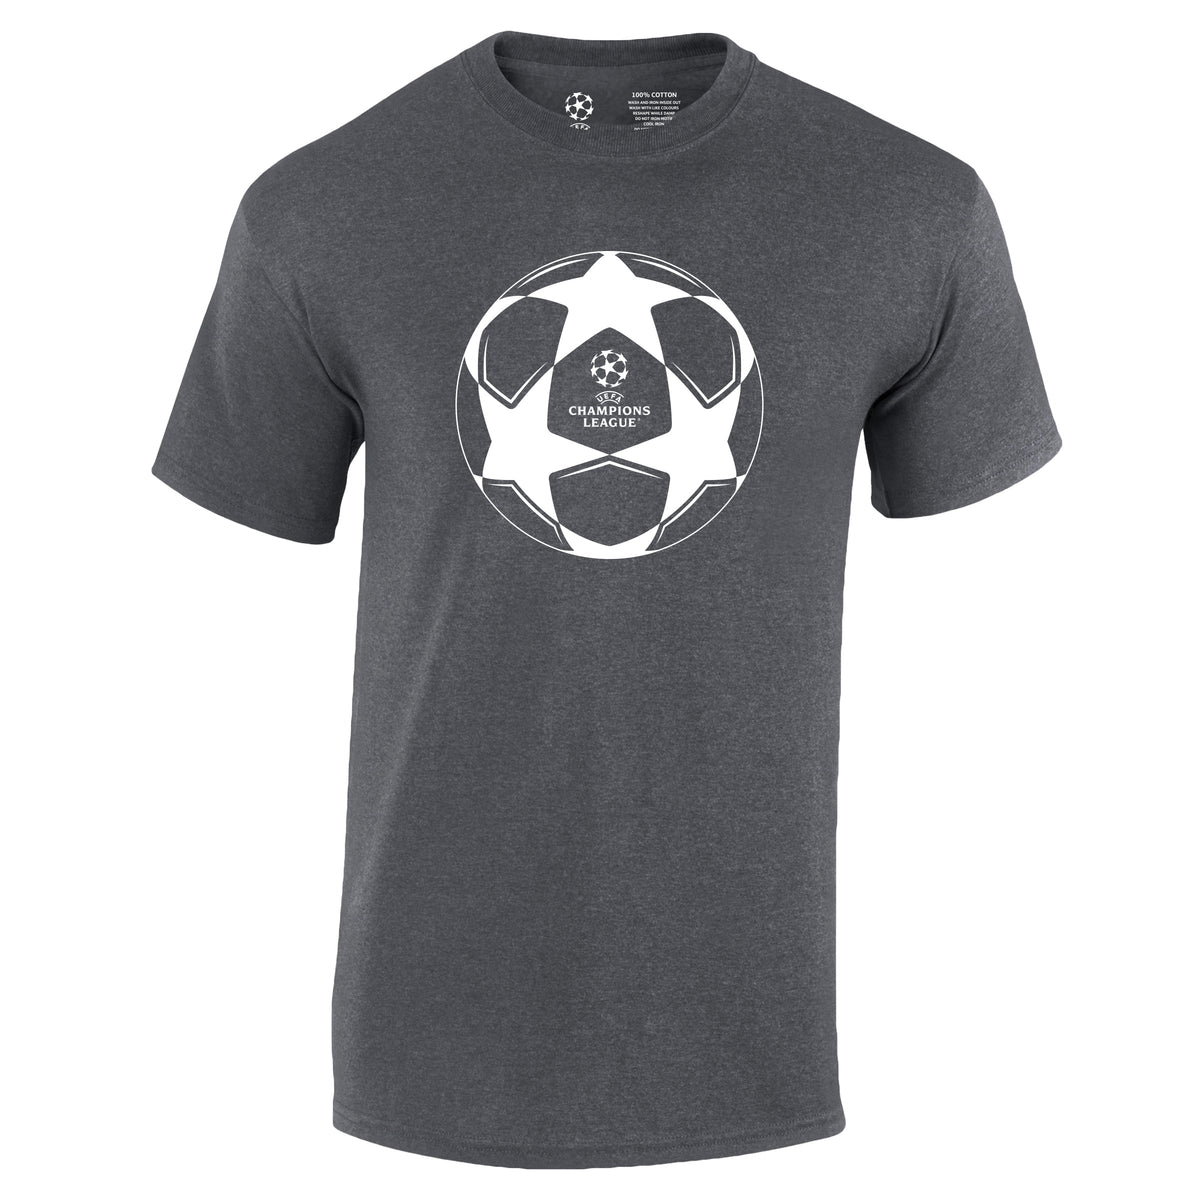 Champions League Football T-Shirt Charcoal